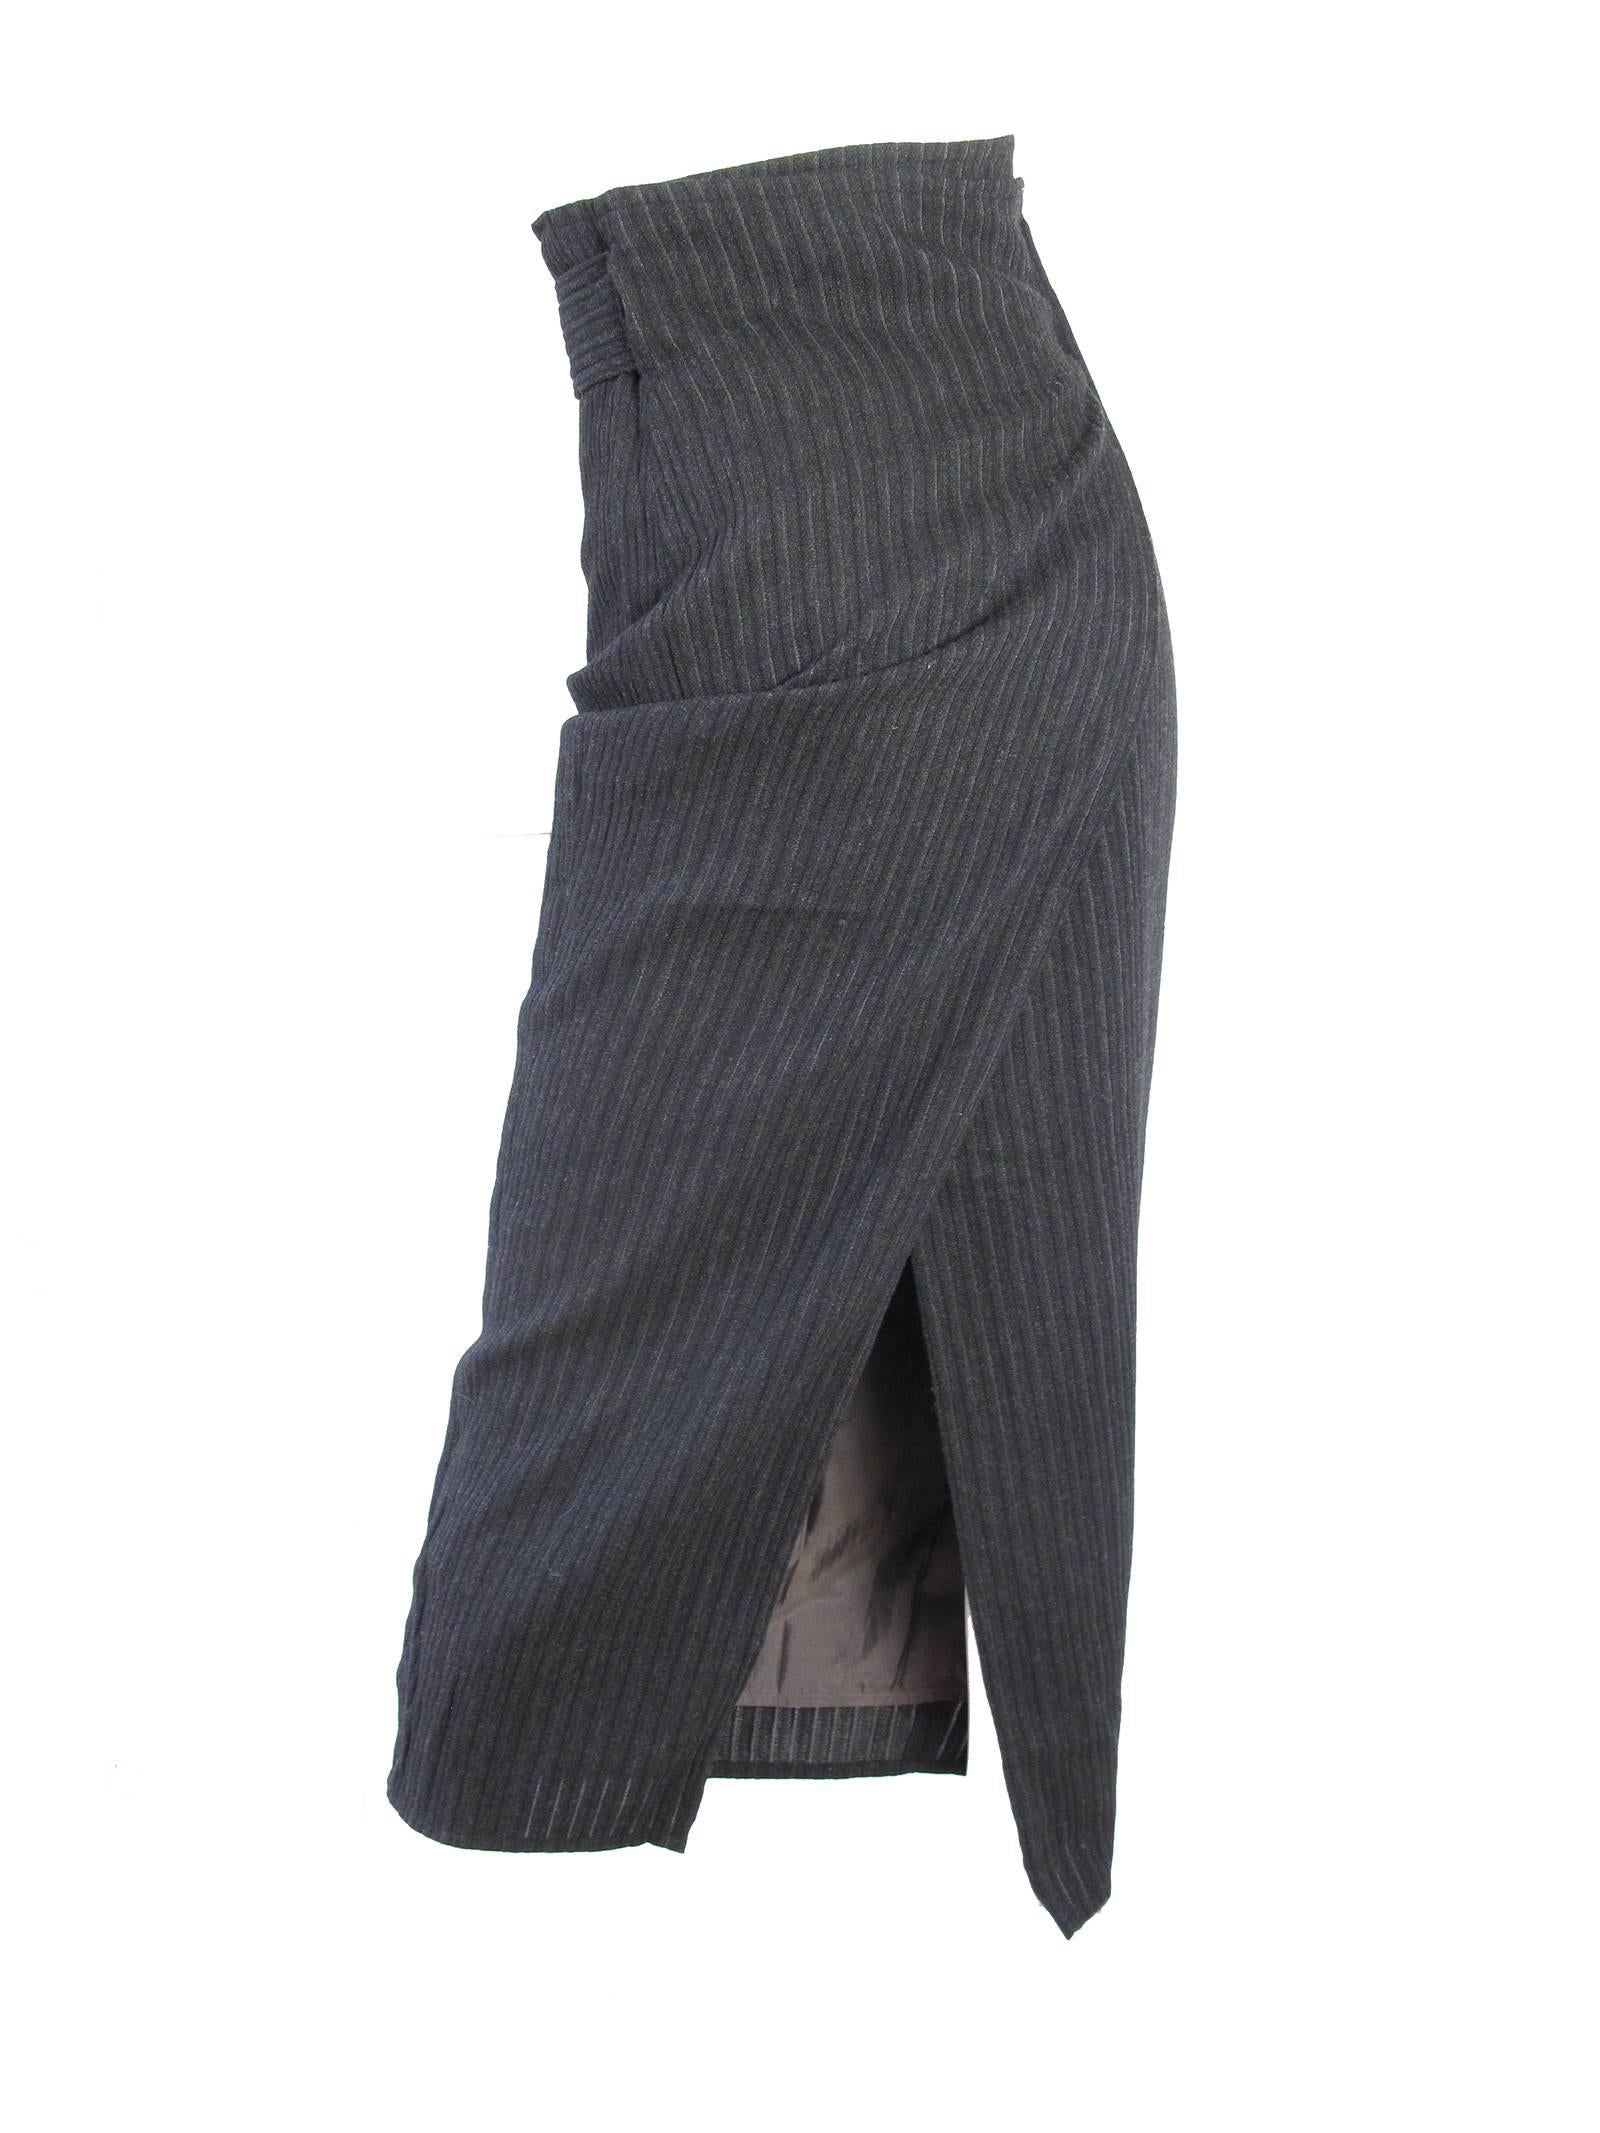 Noir Romeo Gigli, jupe portefeuille taille haute, années 1990  en vente